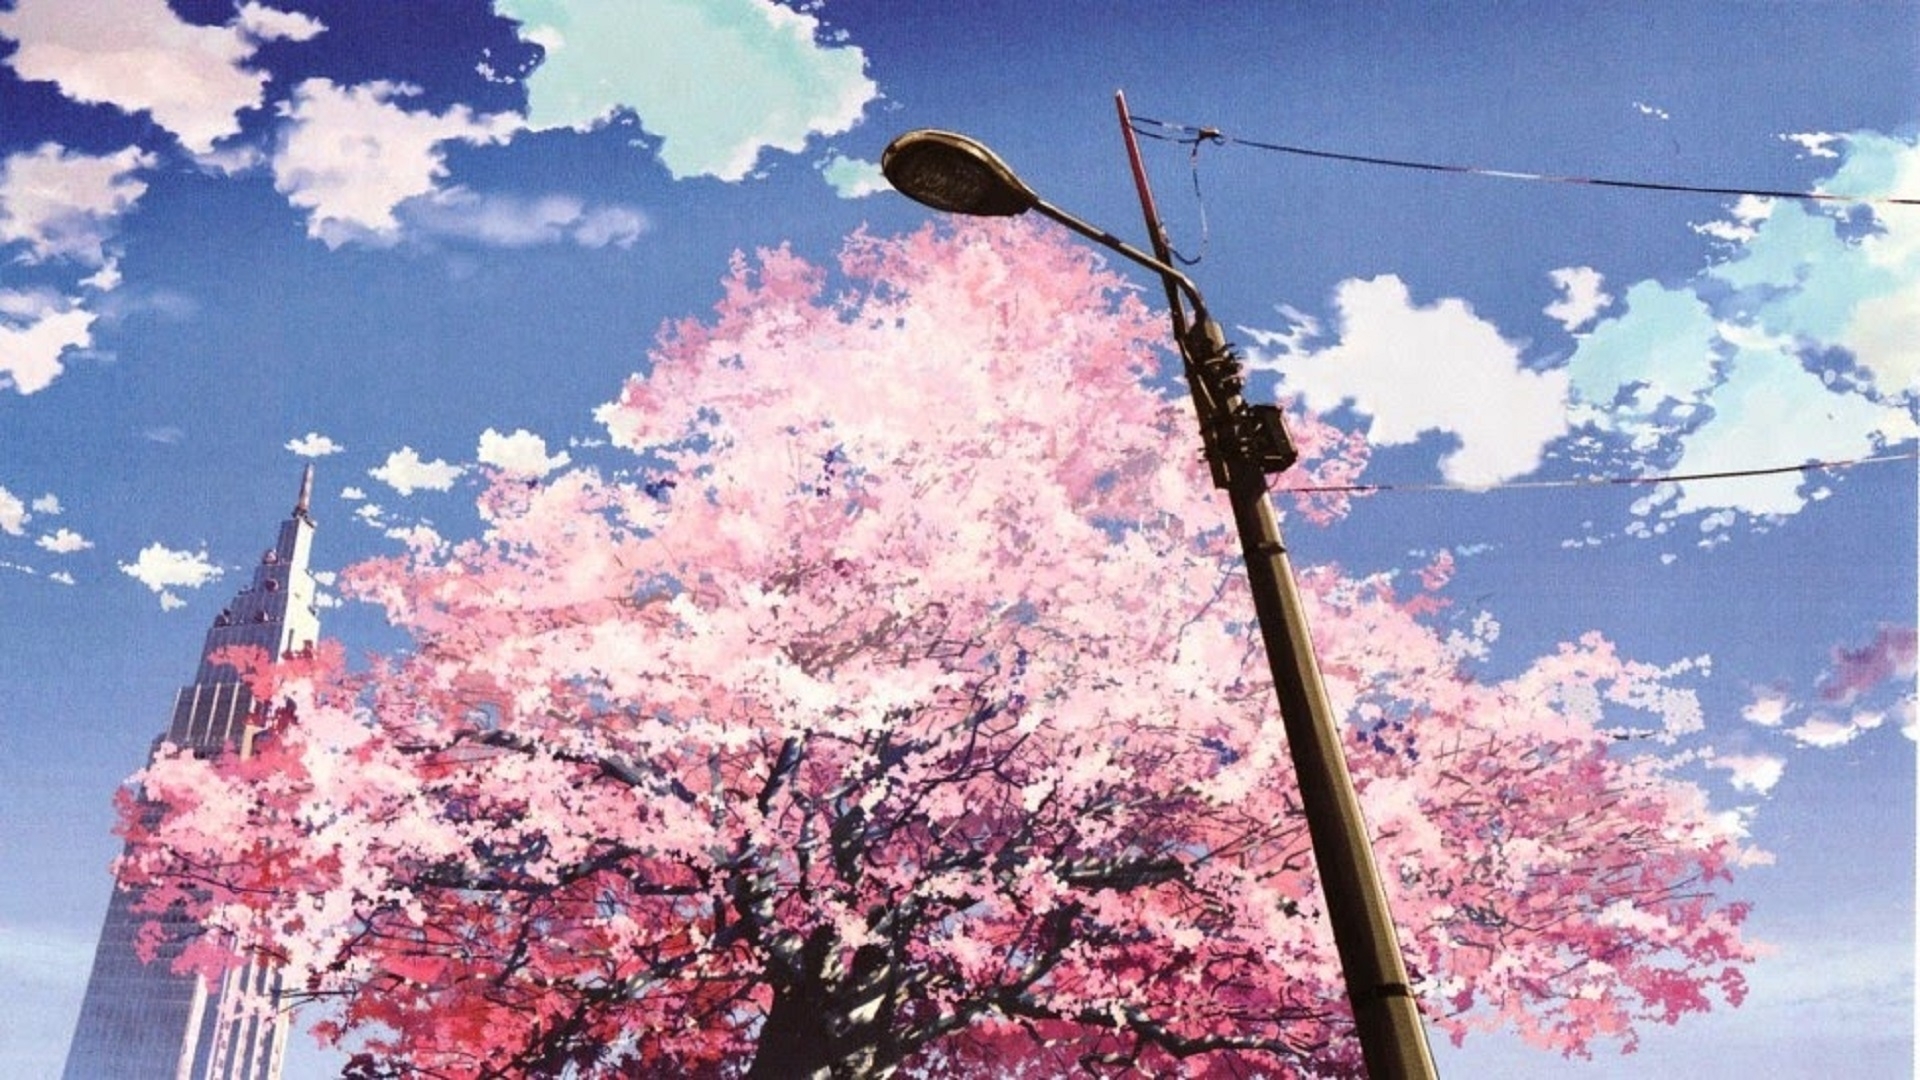 Cherry Blossom Pink Anime Wallpaper Hd Guitar Rabuho